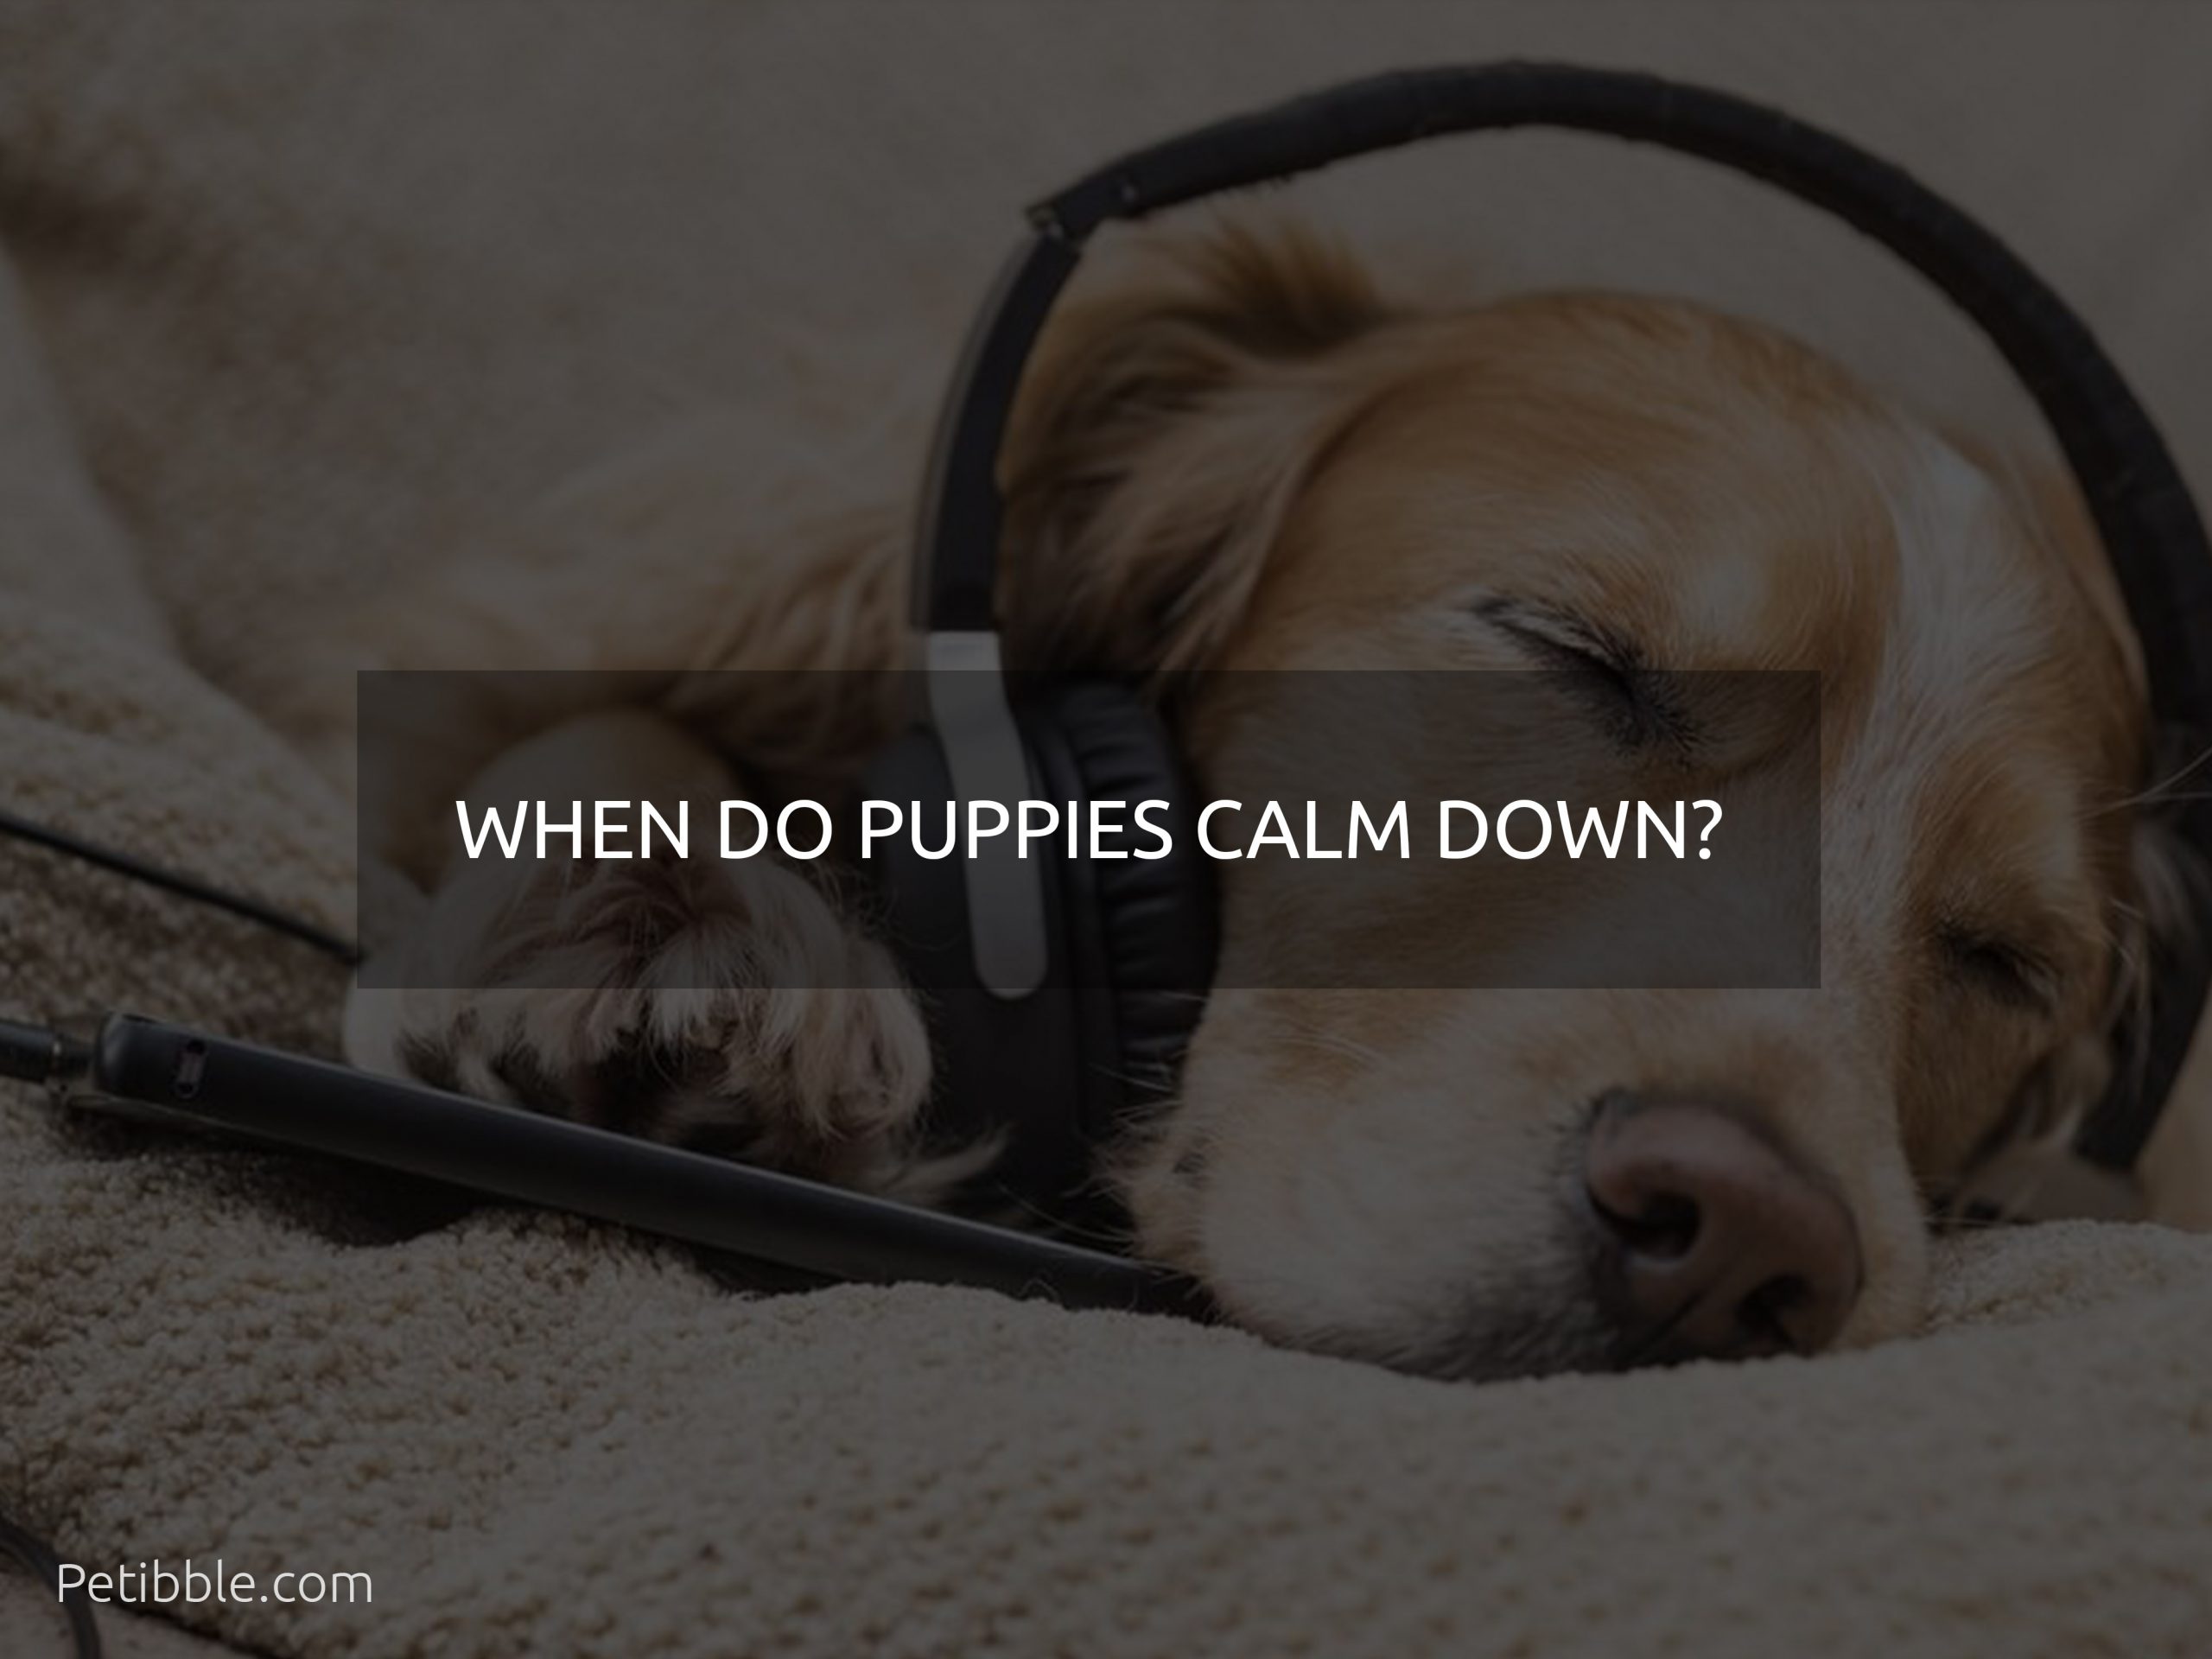 when do puppies calm down?